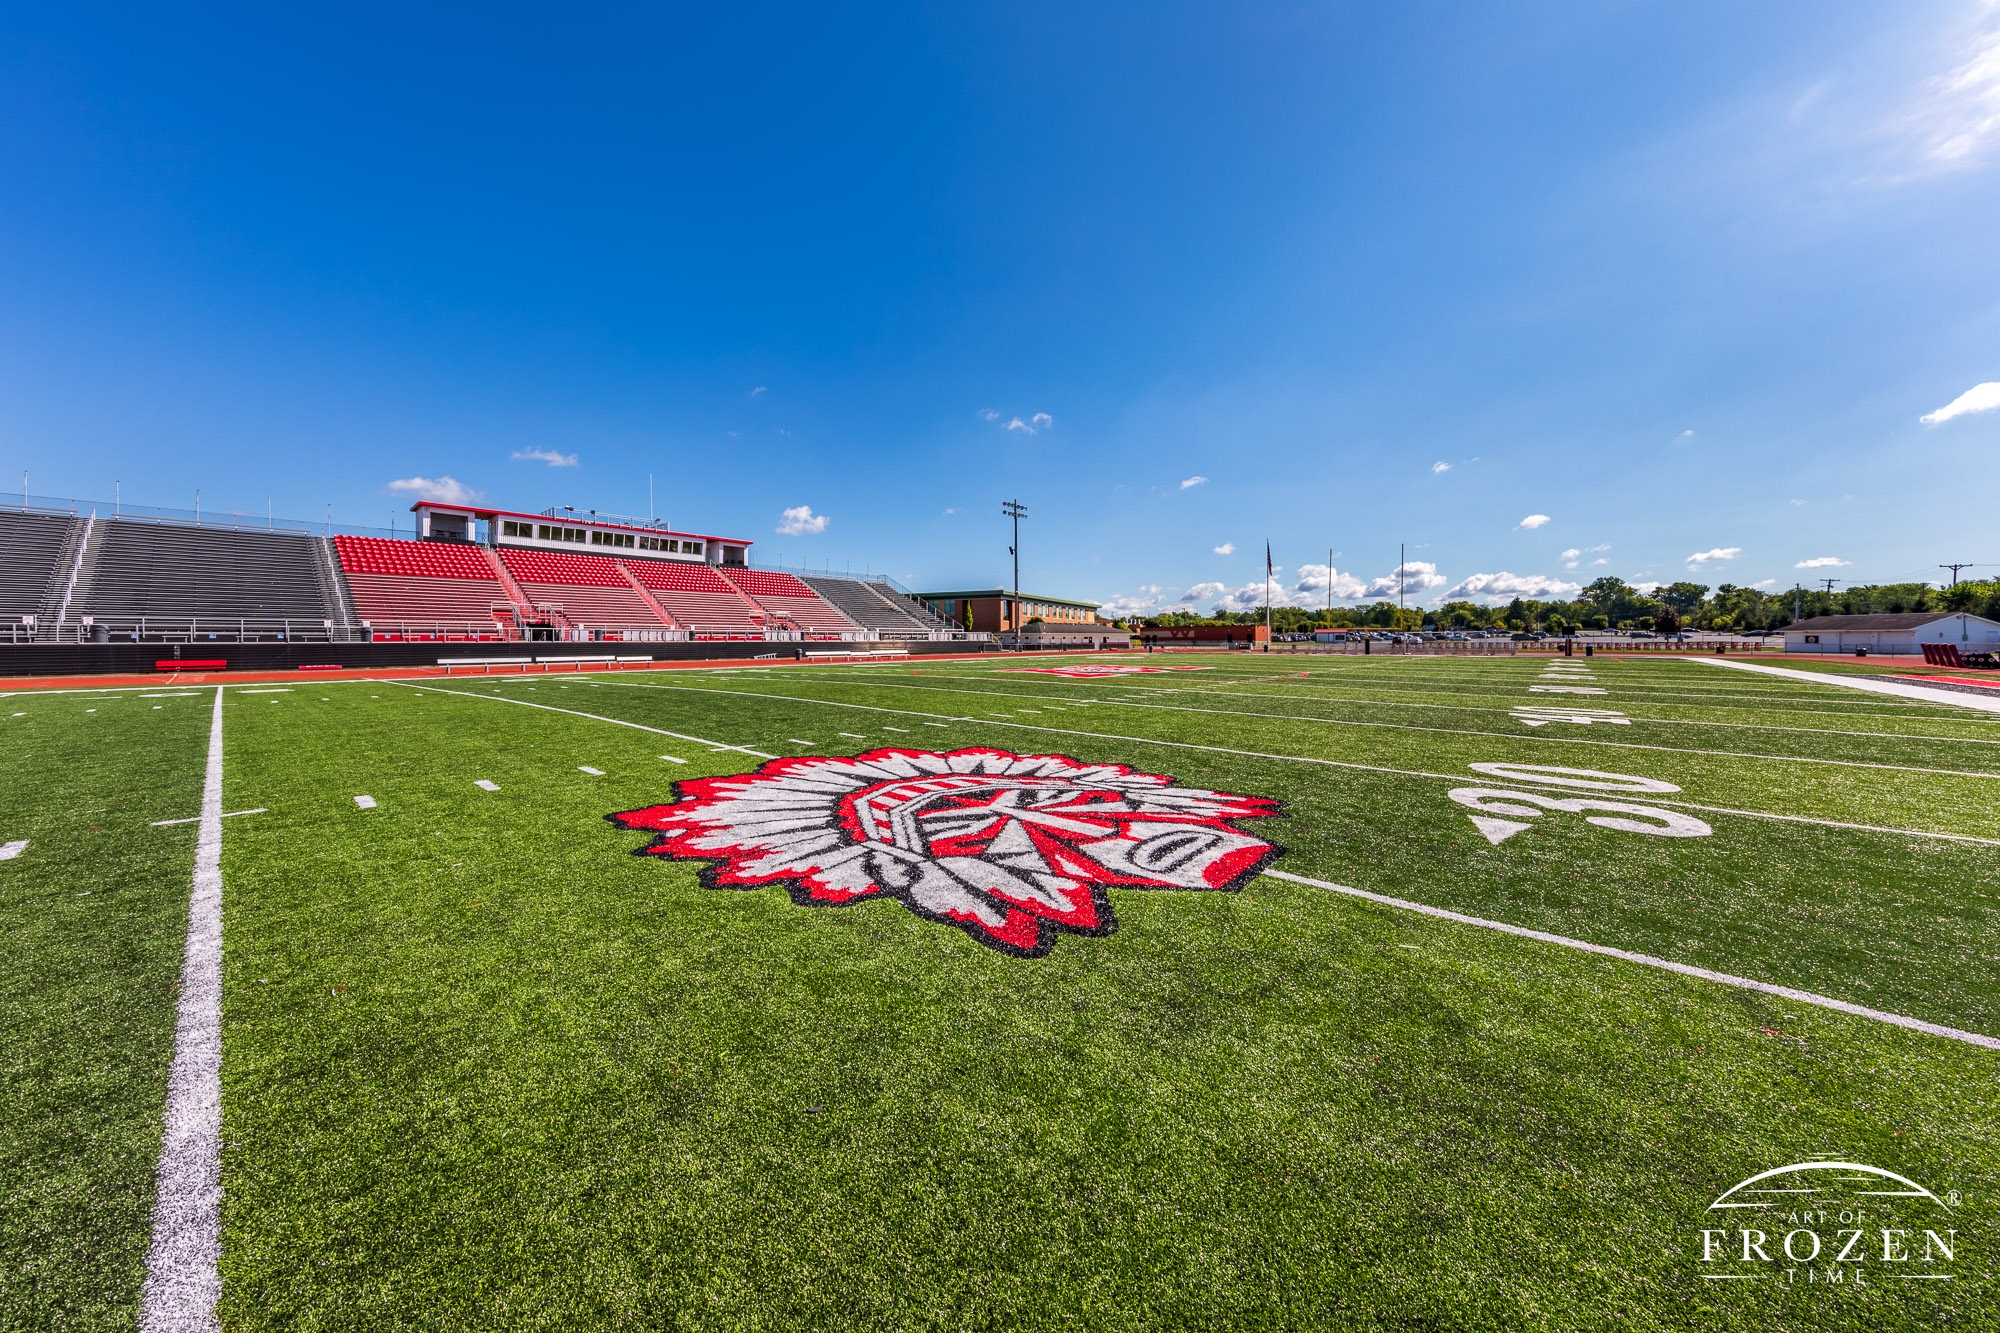 A view of Wayne High School’s Heidkamp Stadium in Huber Heights Ohio featuring its Wayne Warrior Mascot